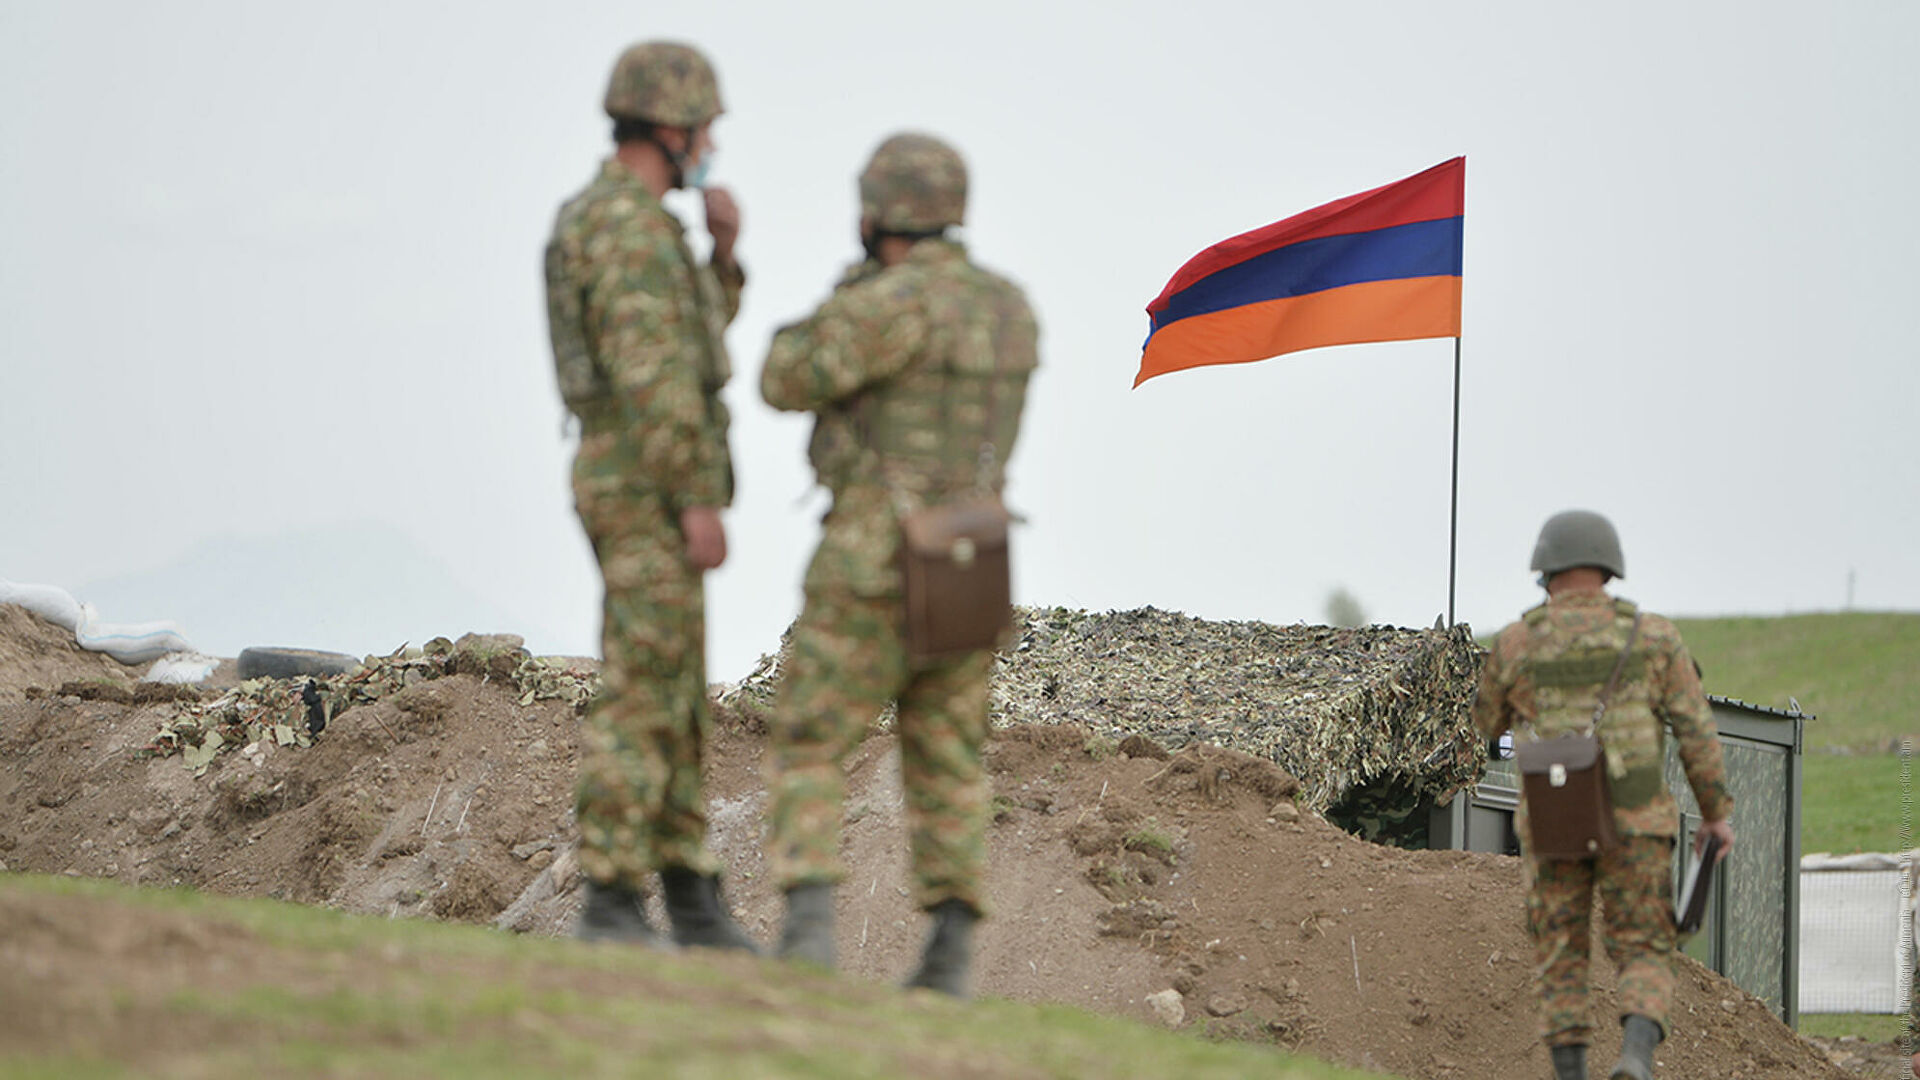 Ensuring Armenia's security